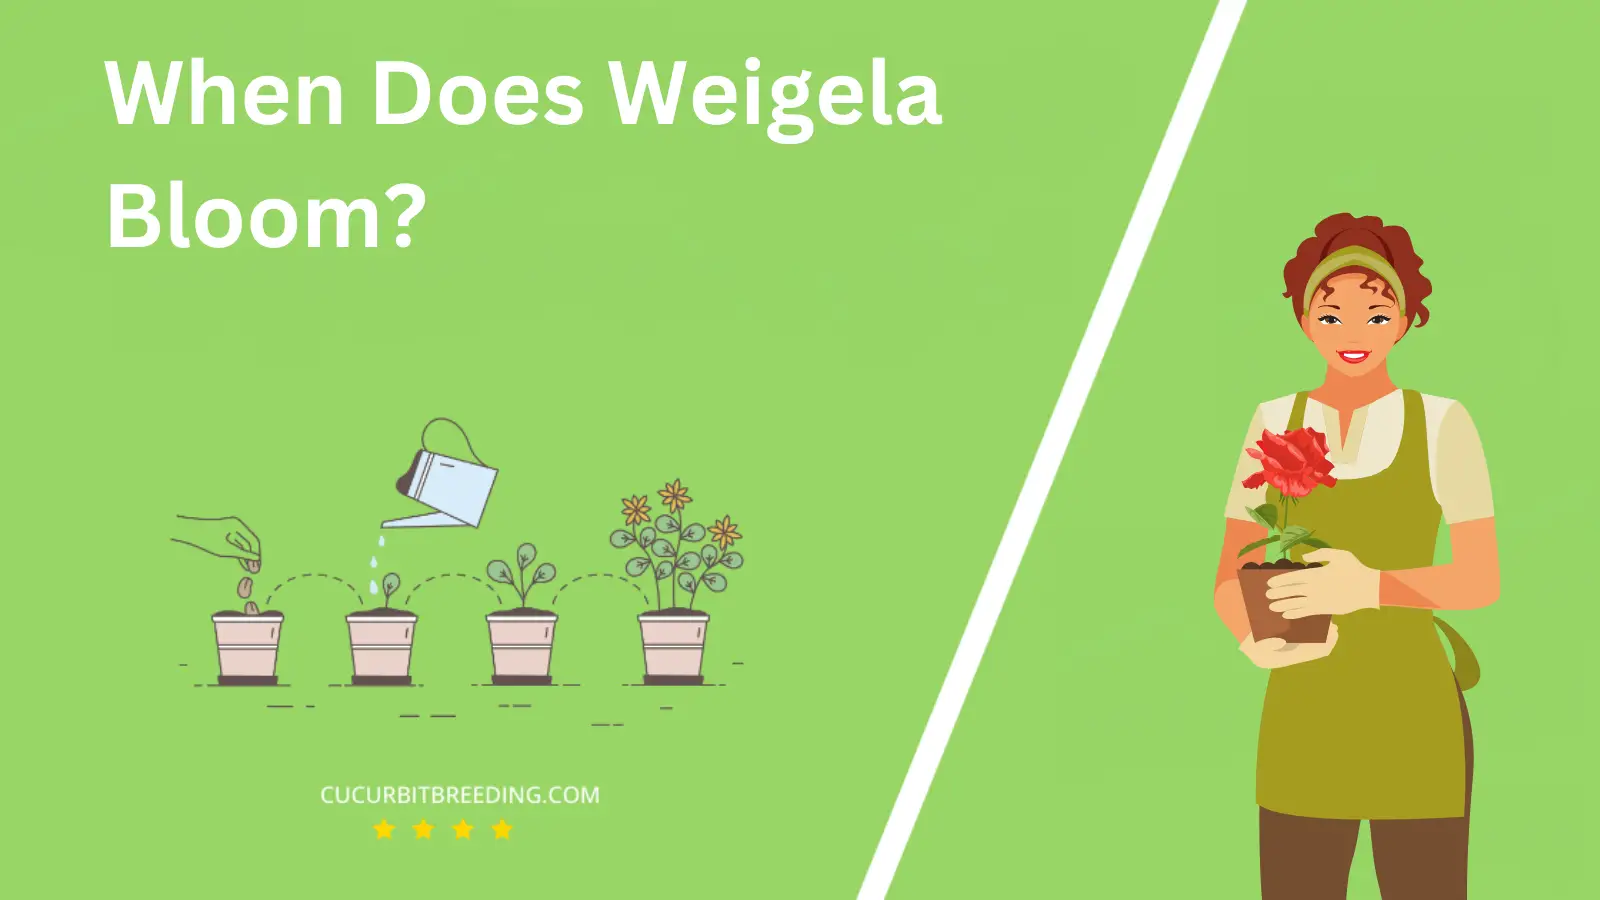 When Does Weigela Bloom?